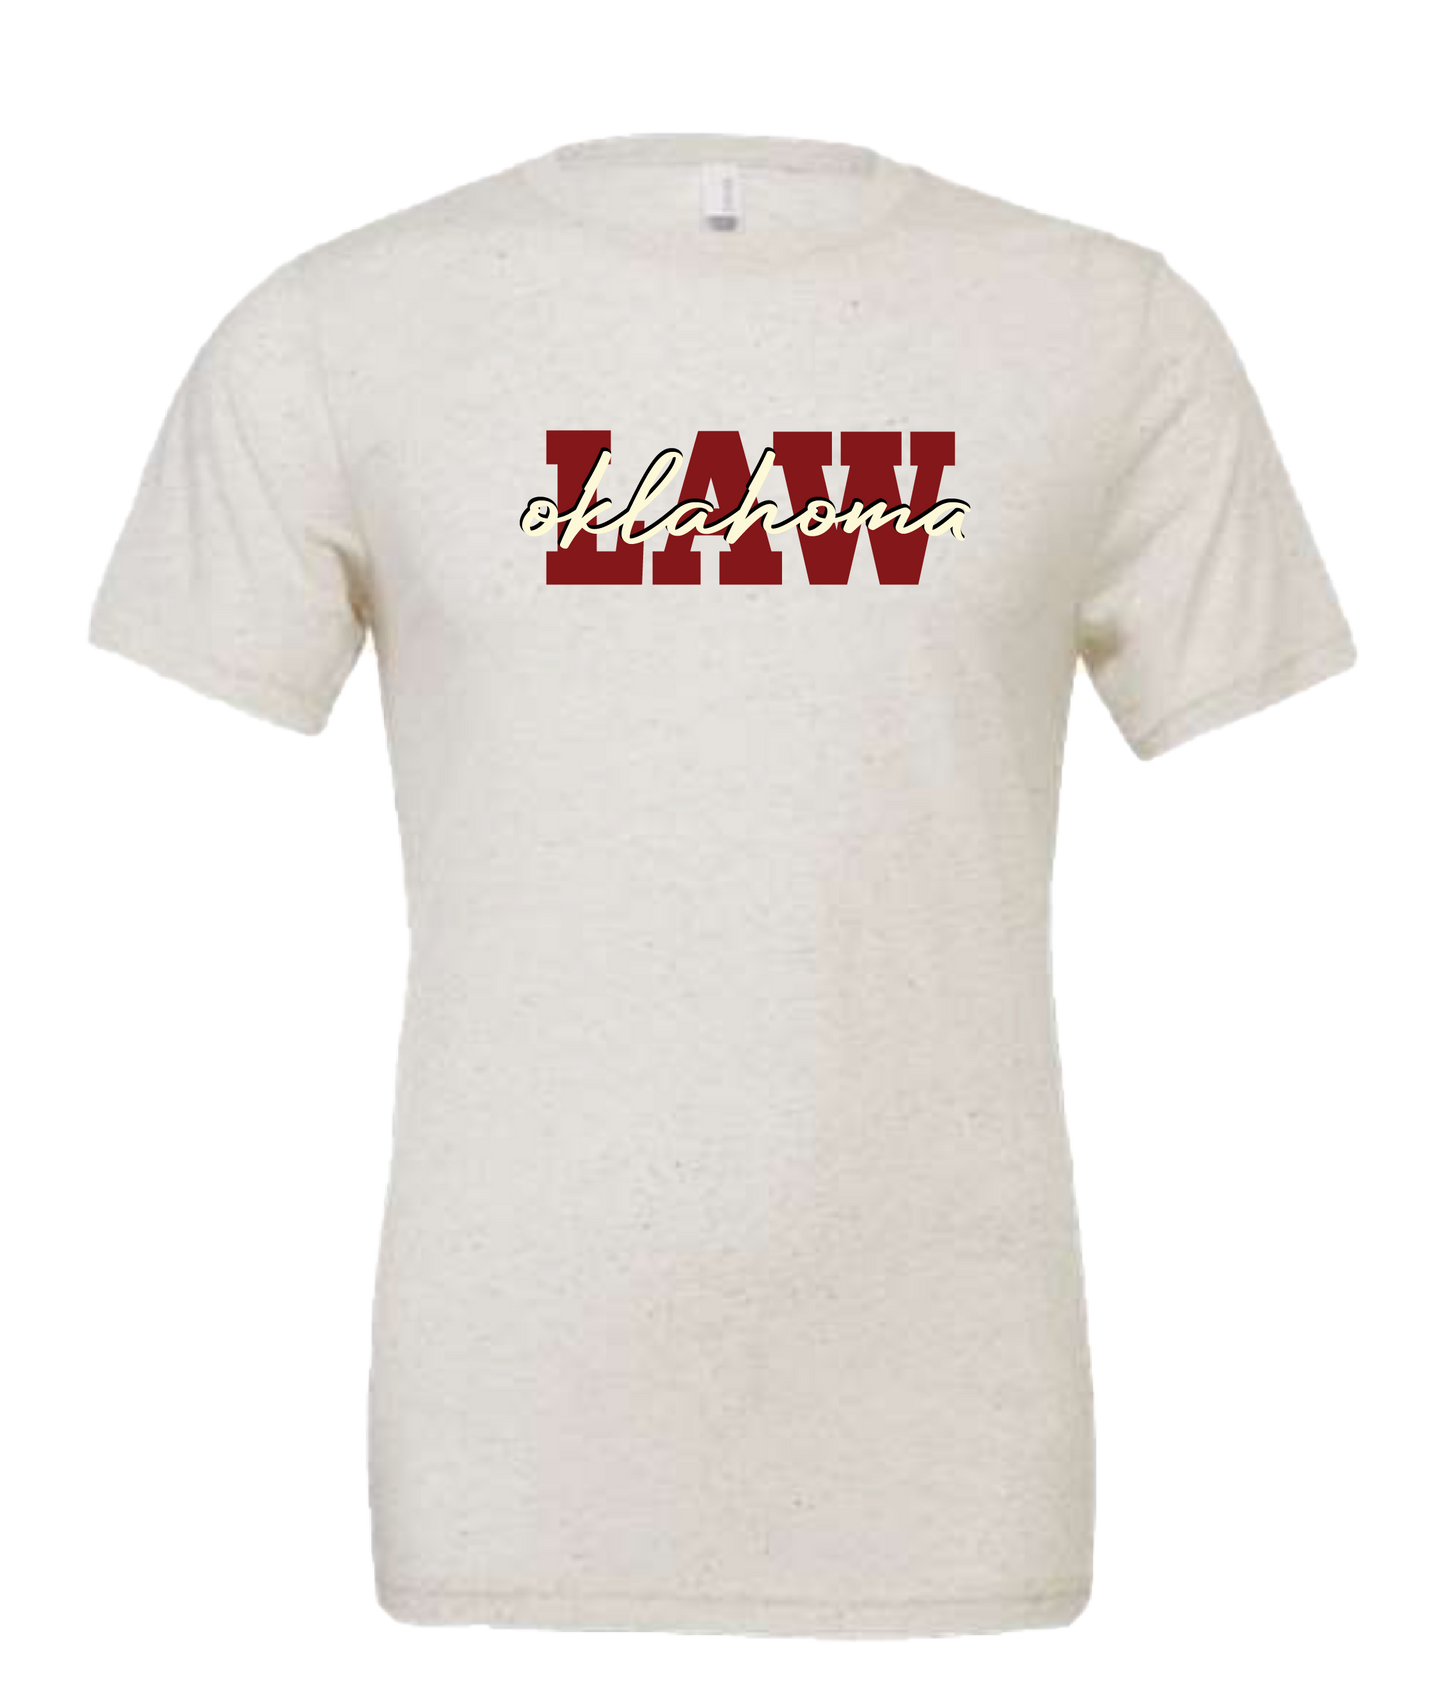 Oklahoma Law script t-shirt